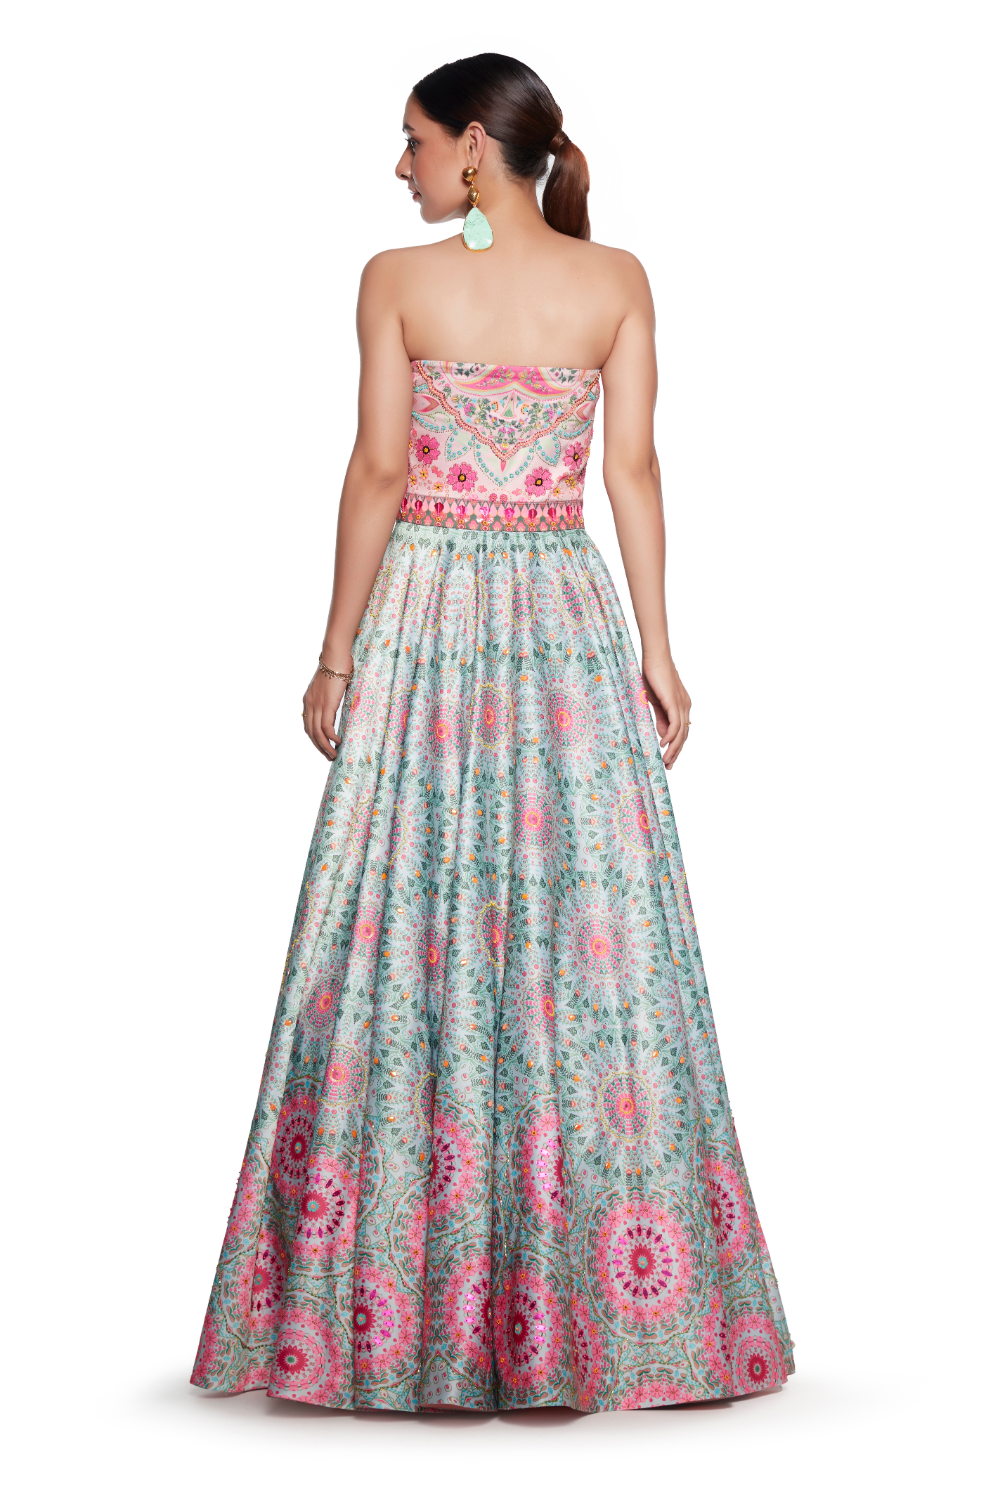 Buy Light Pink Sequins Embroidered Evening Gown Online | Samyakk